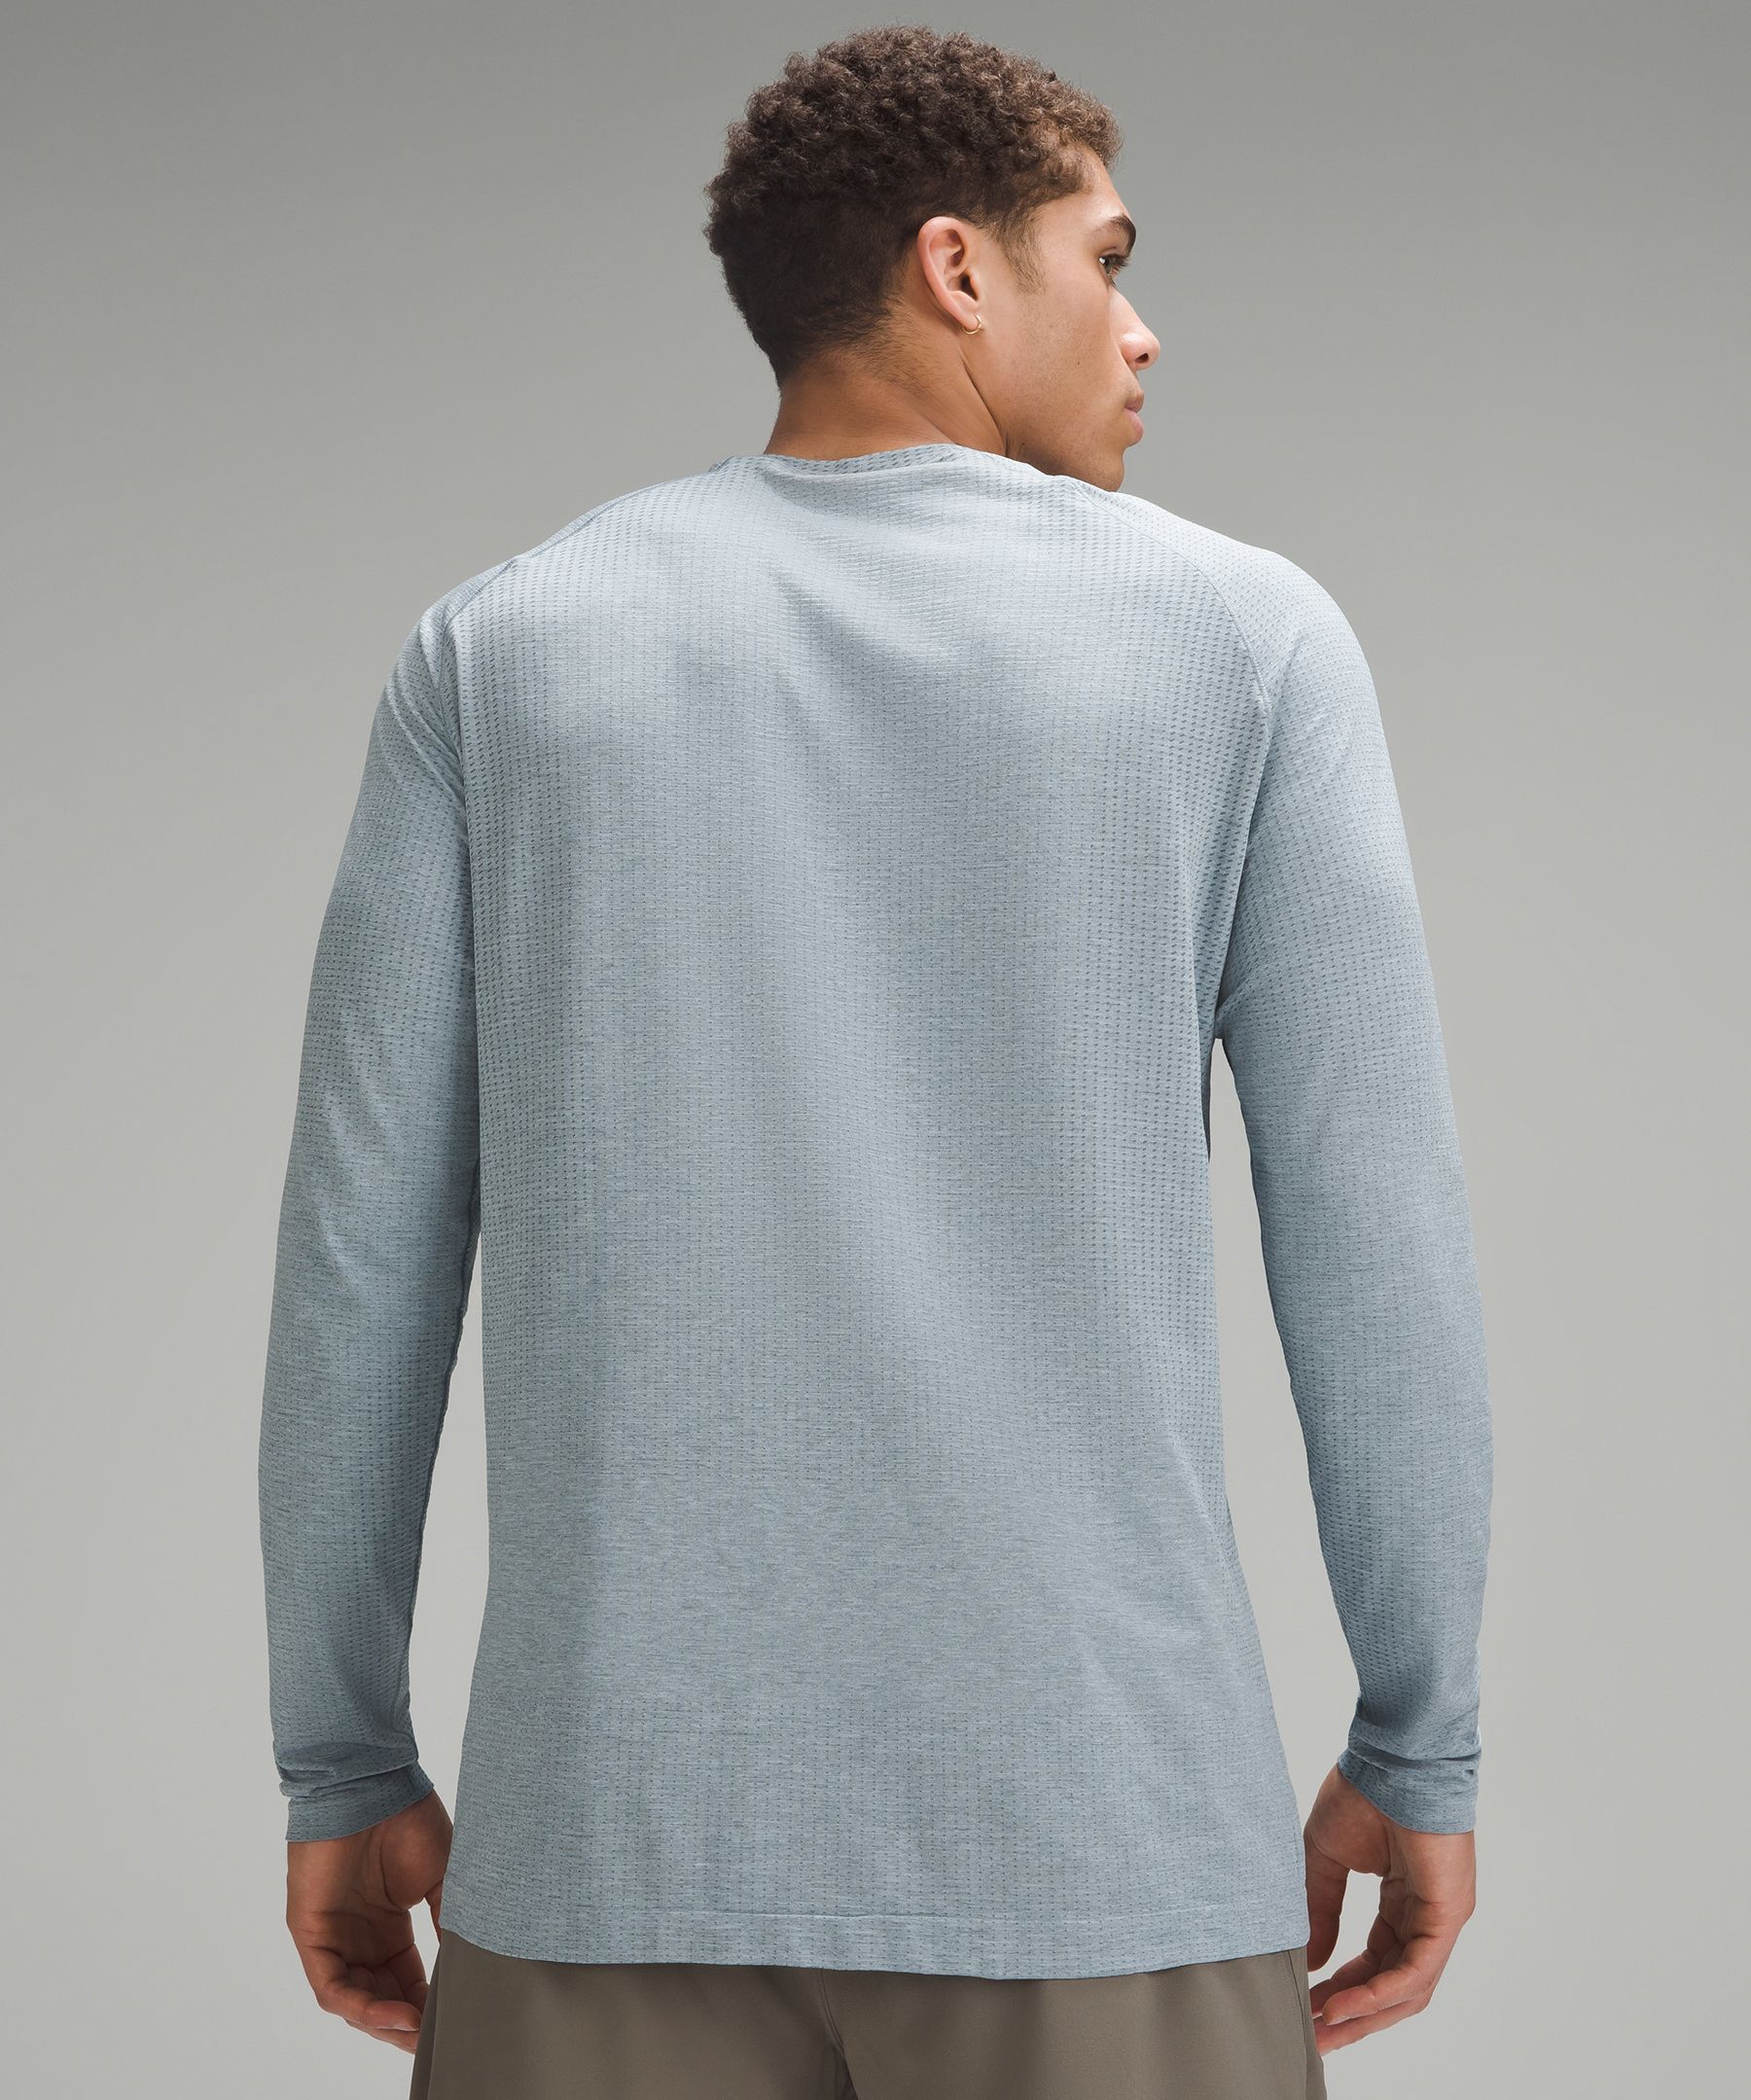 Grey Metal Vent Tech jersey sweatshirt, Lululemon